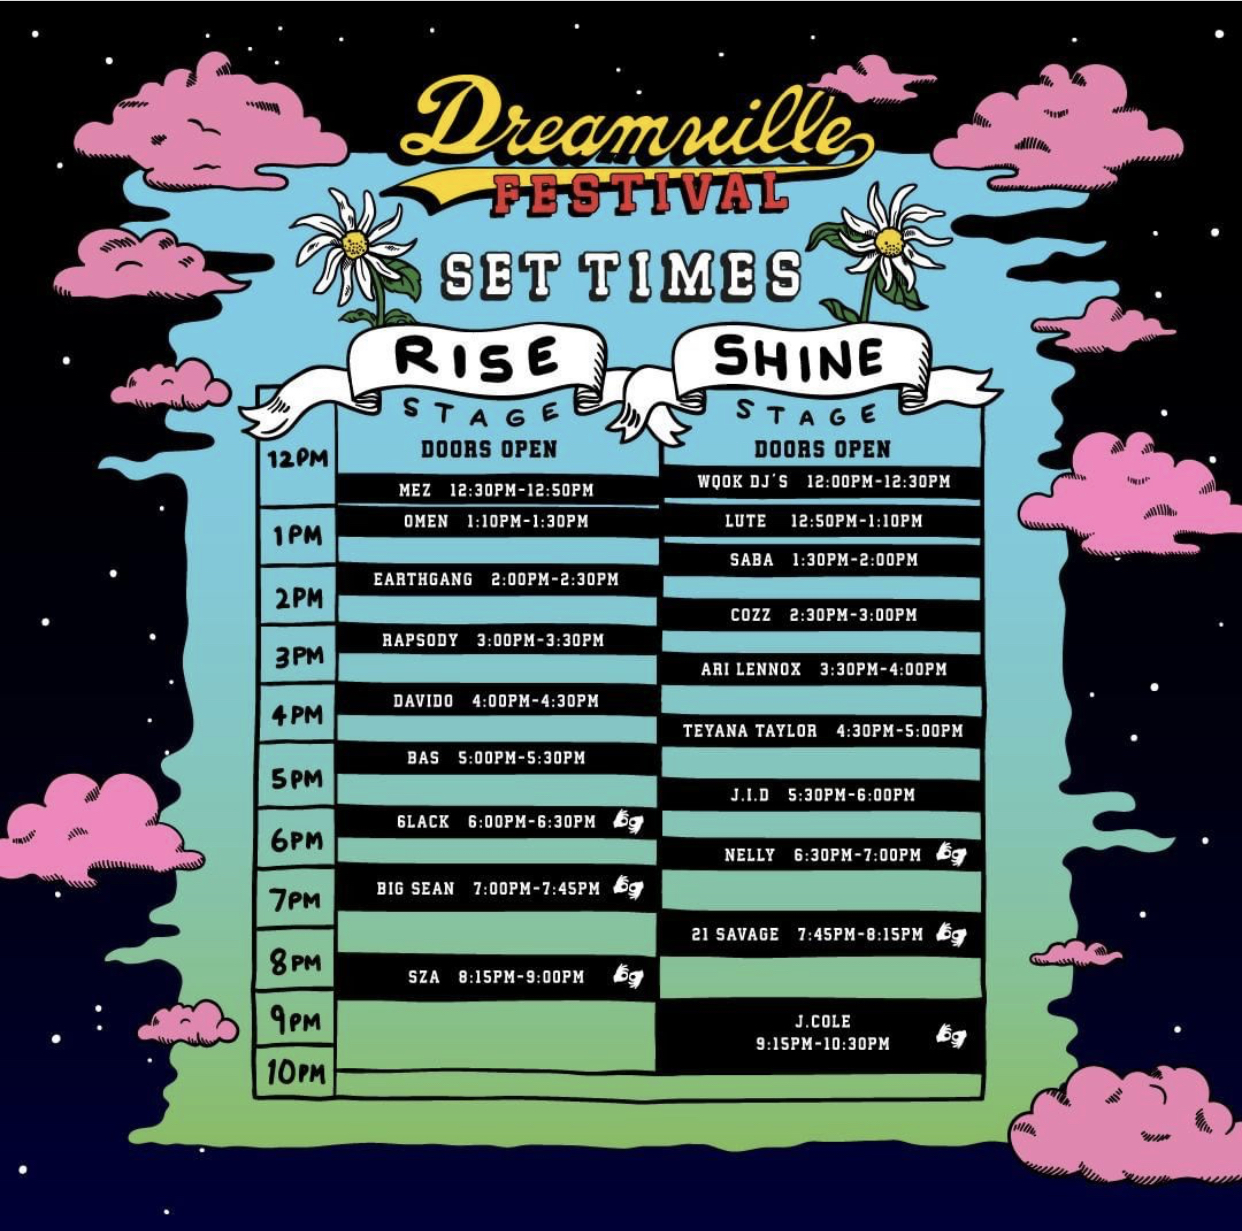 [WATCH] Dreamville Festival 2019 97.9 The Box